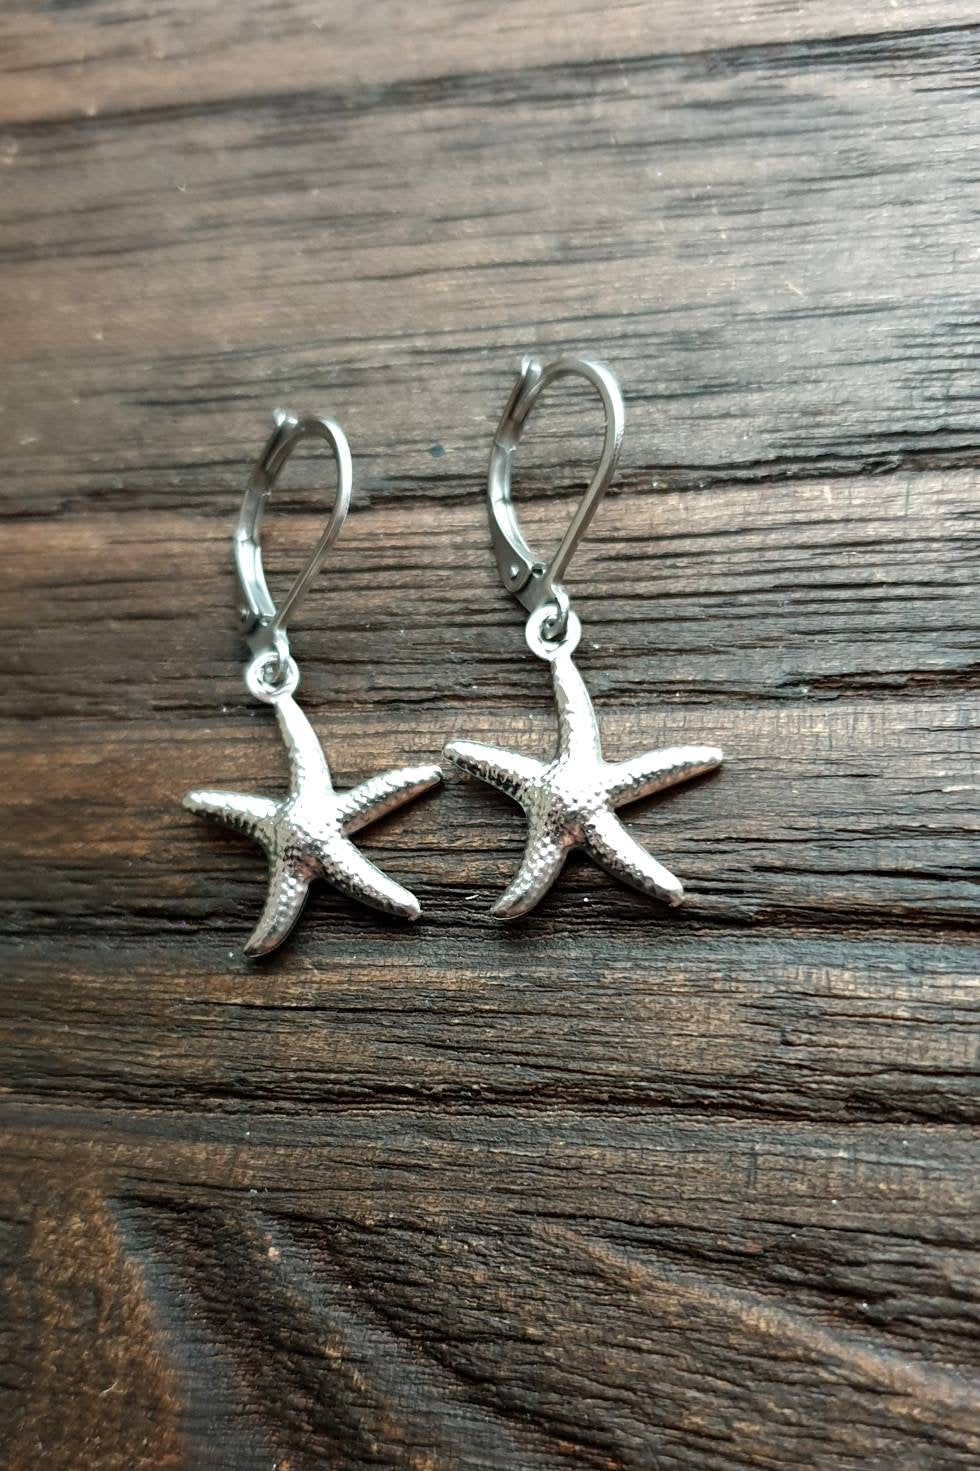 Starfish Leverback Earrings, Stainless Steel Dangle Leverback or Hook Earrings.